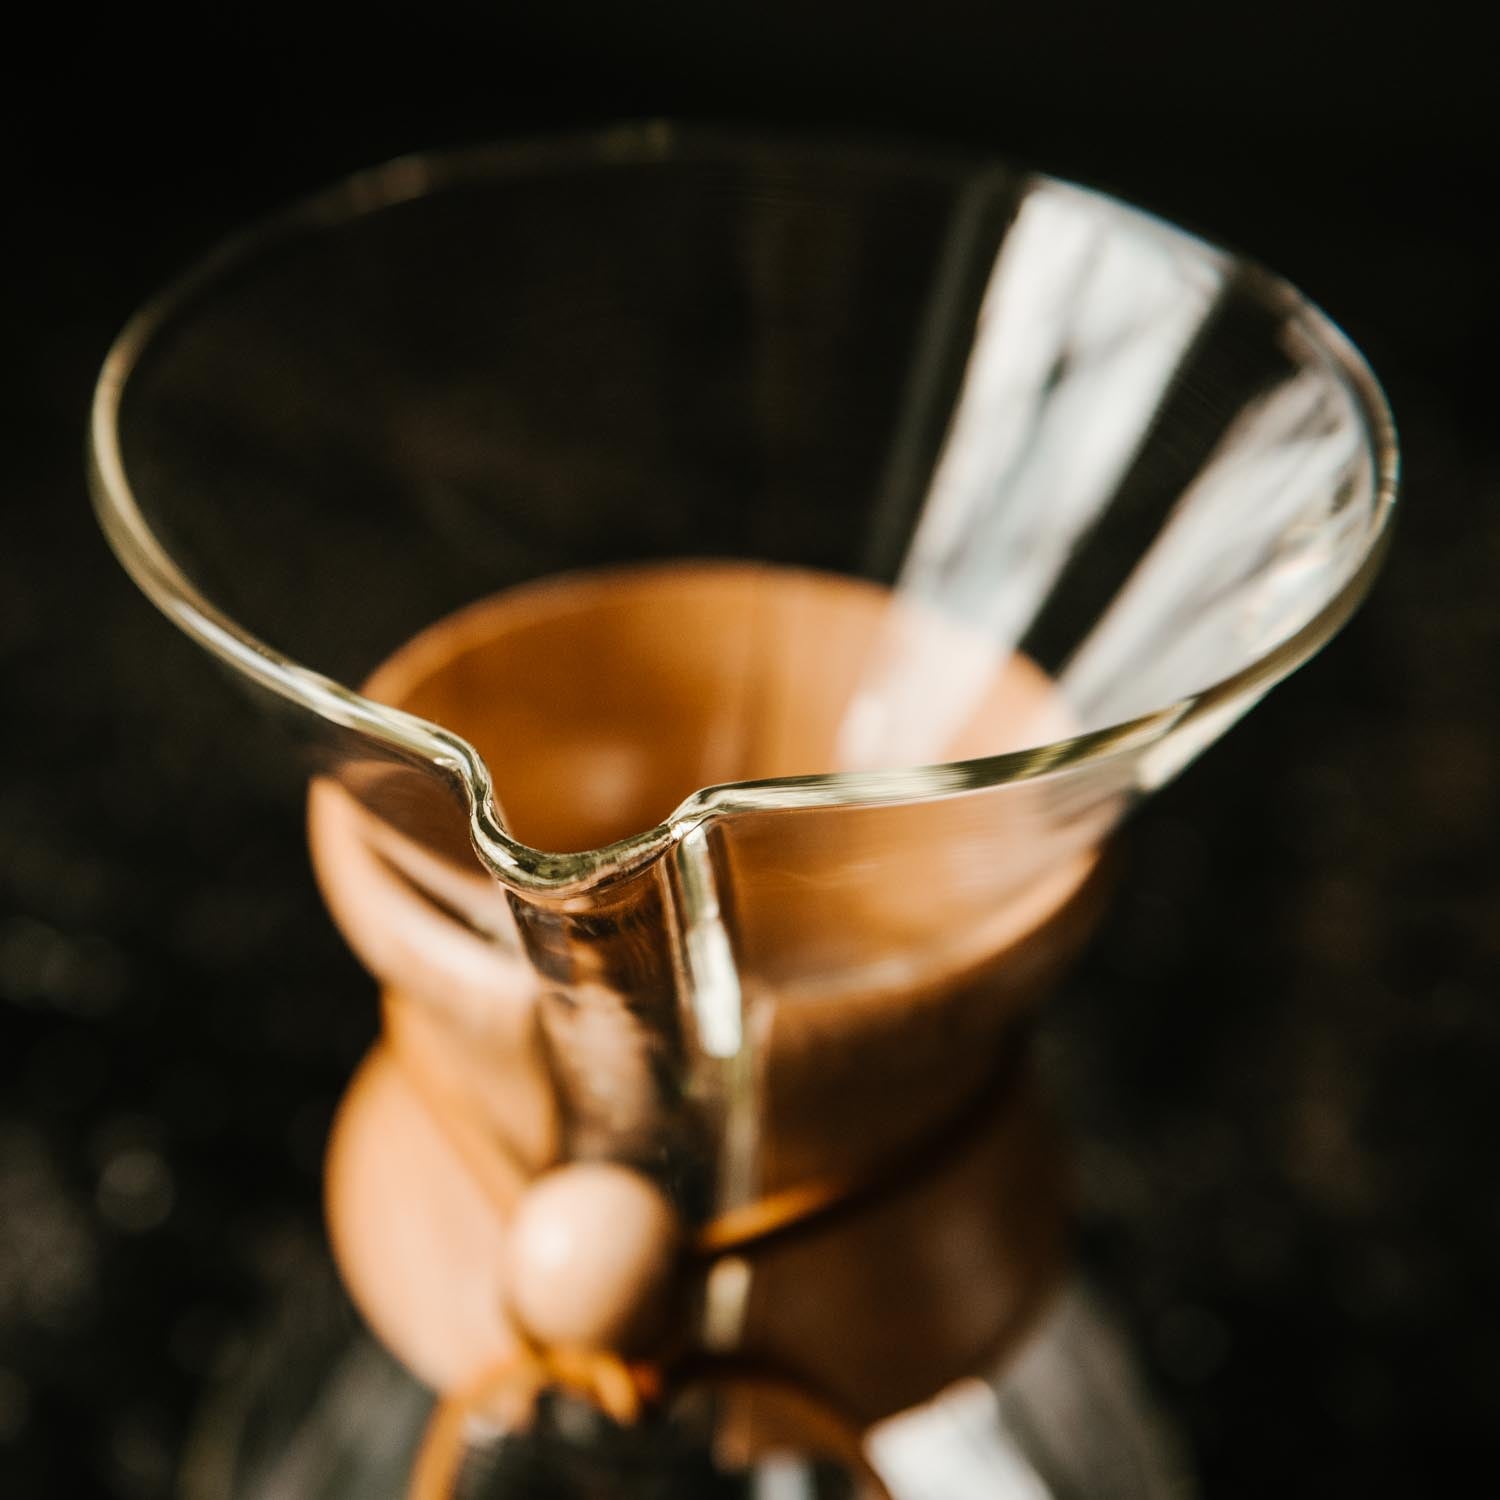 Chemex 6 Cup Brewer : Ritual Coffee Roasters